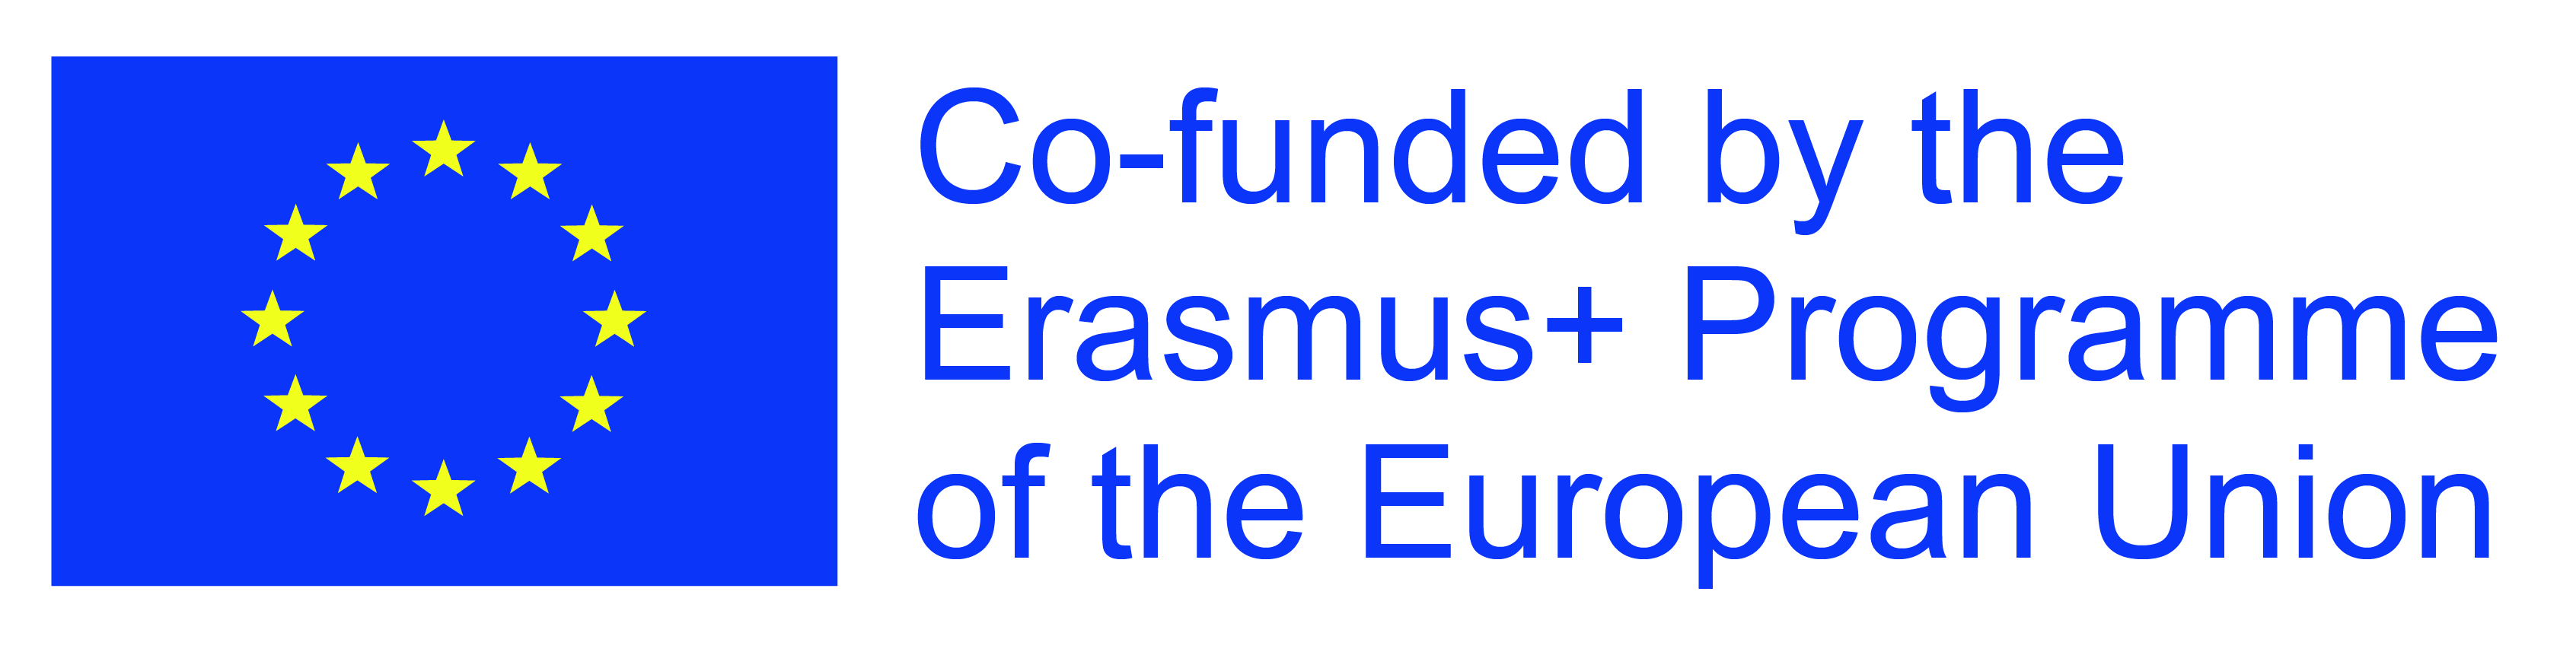 EASTEM logo